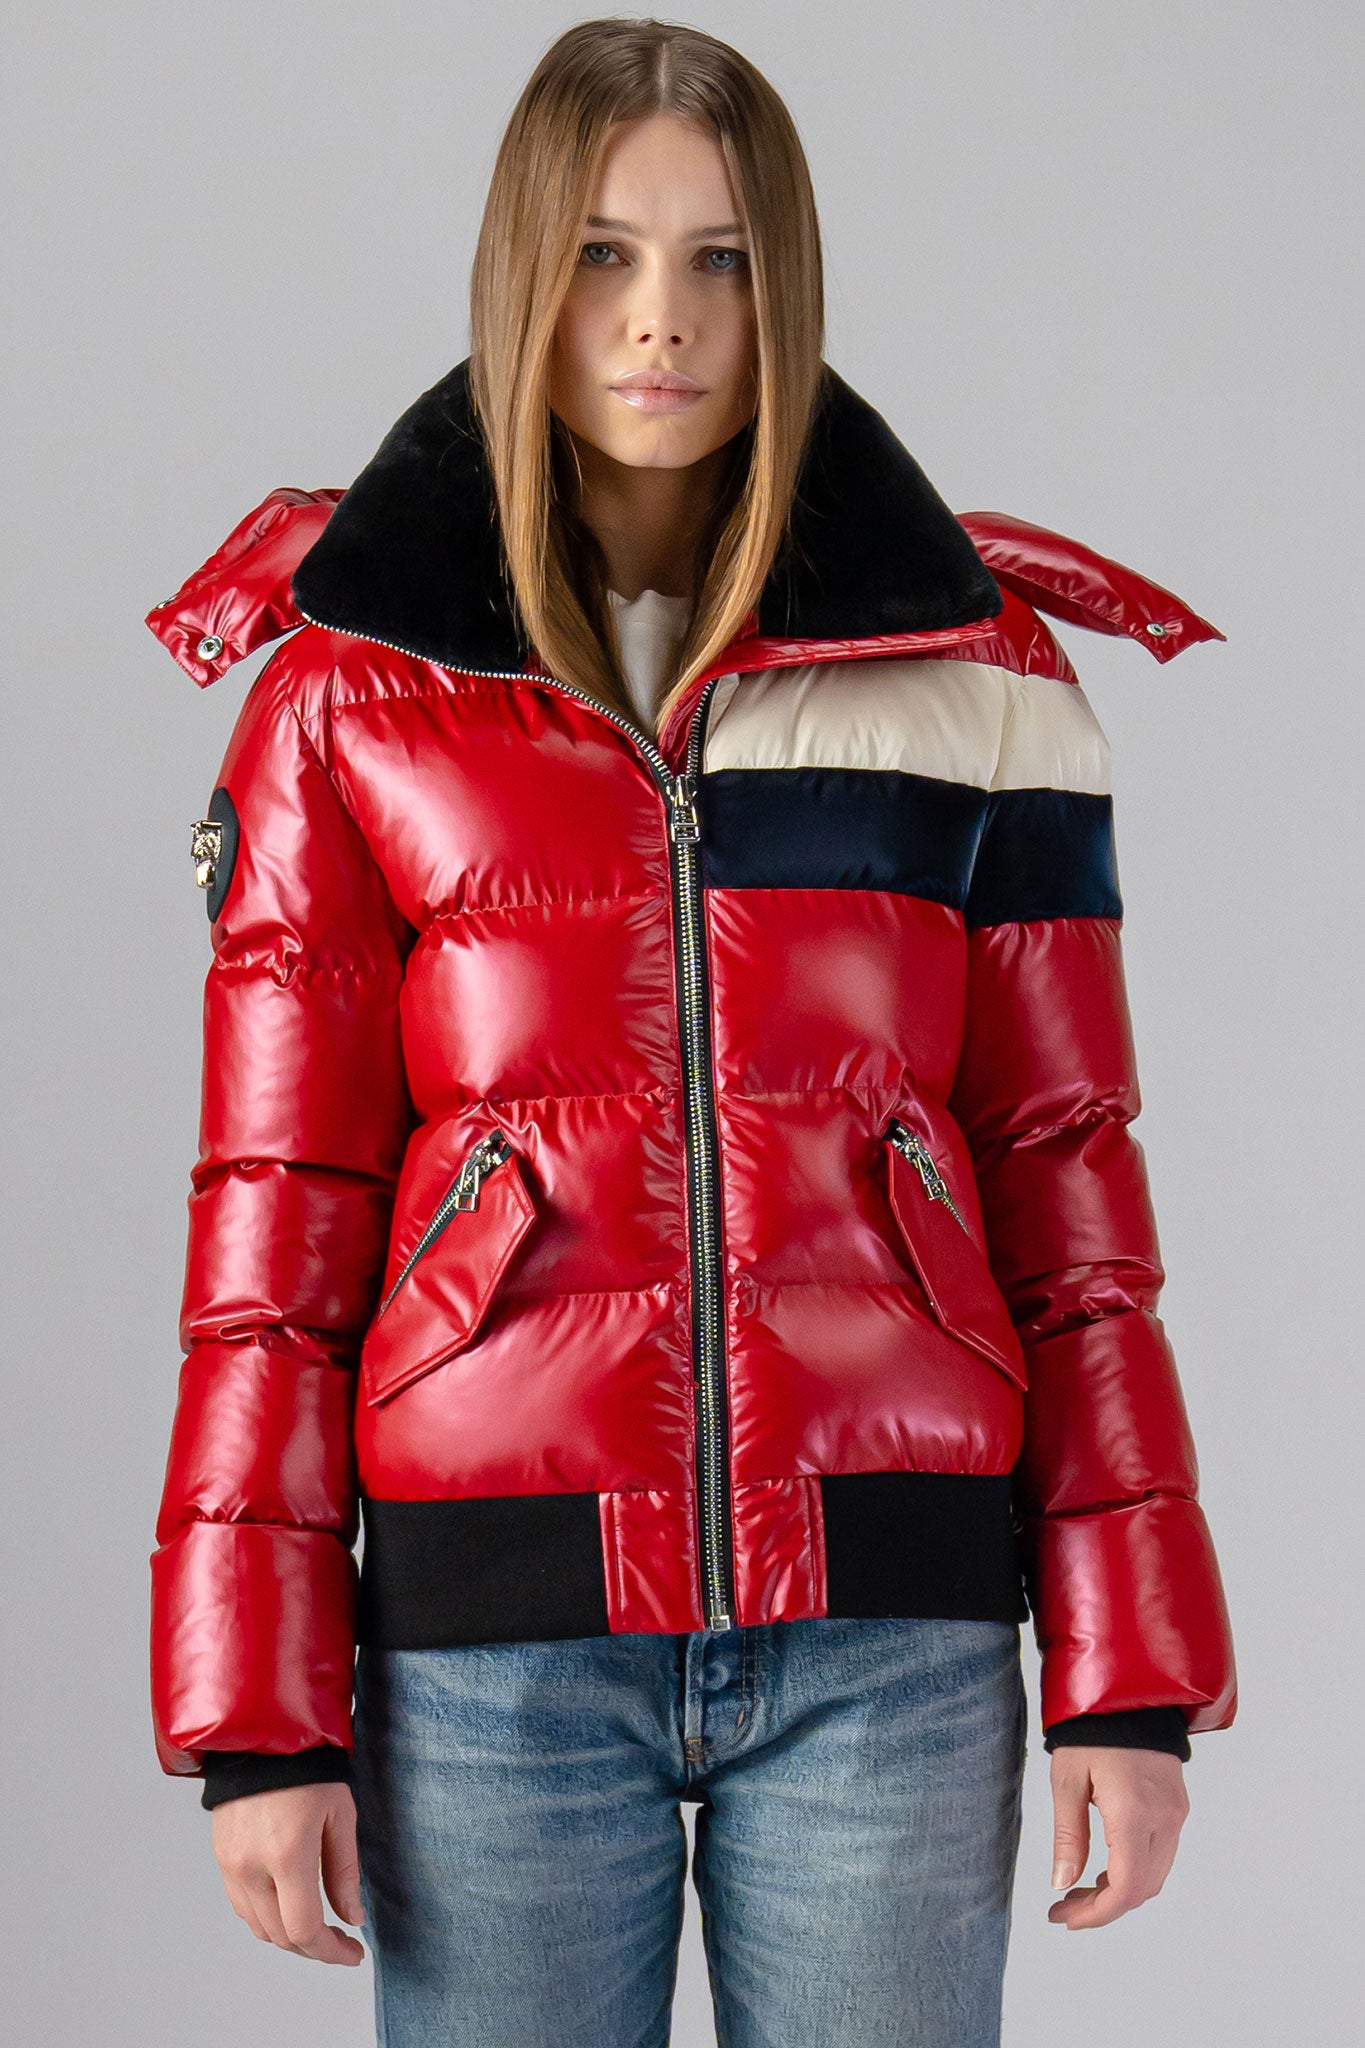 Woodpecker Women's Woody Bomber Winter coat. High-end Canadian designer winter coat for women in 